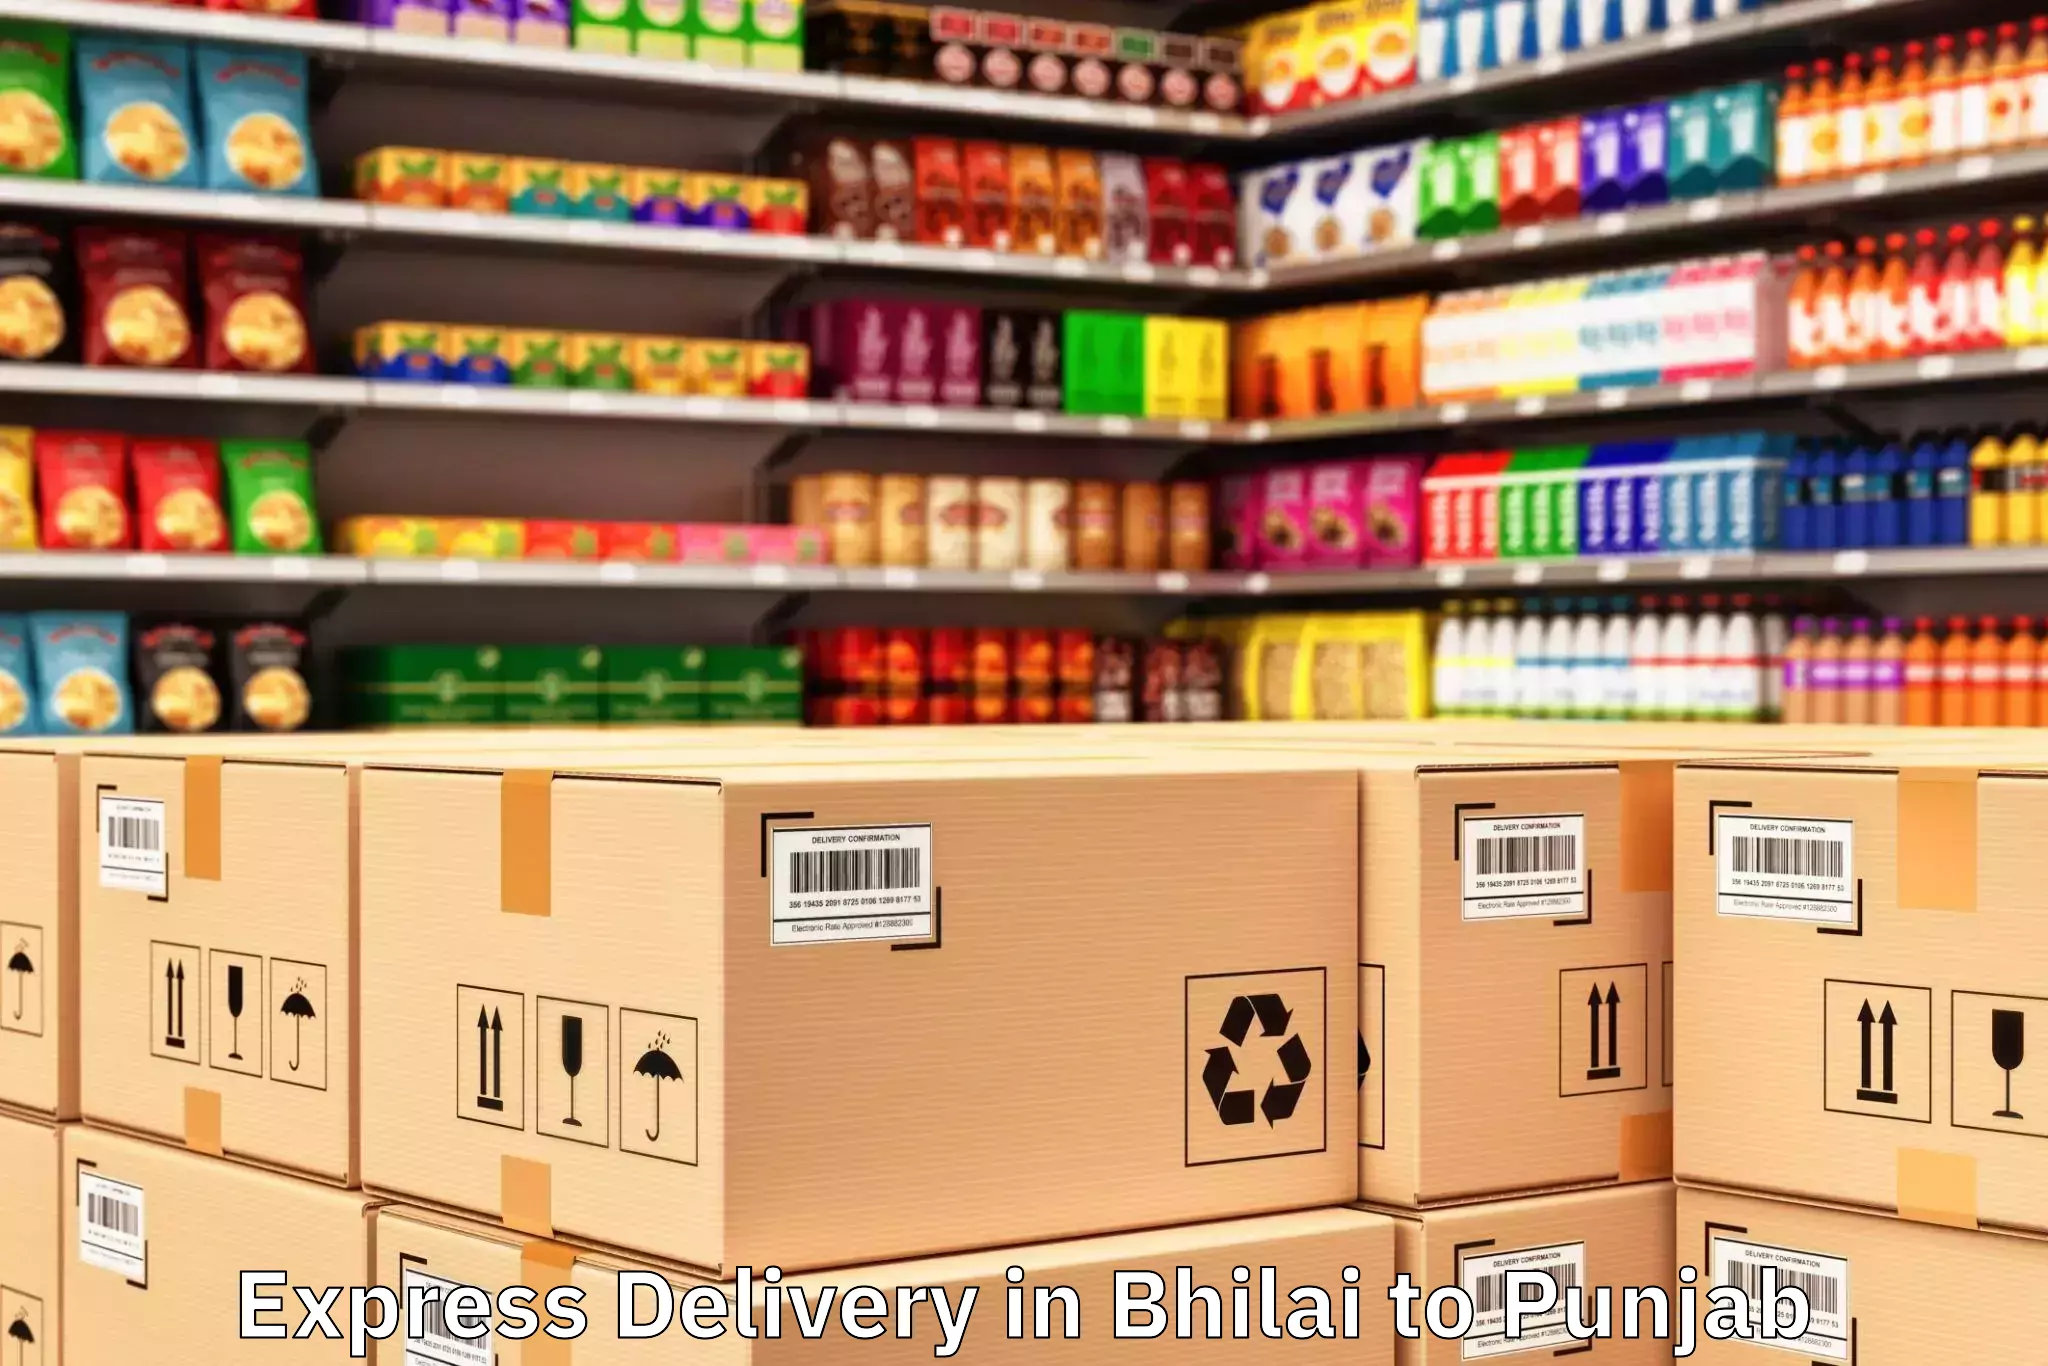 Bhilai to Punjab Express Delivery